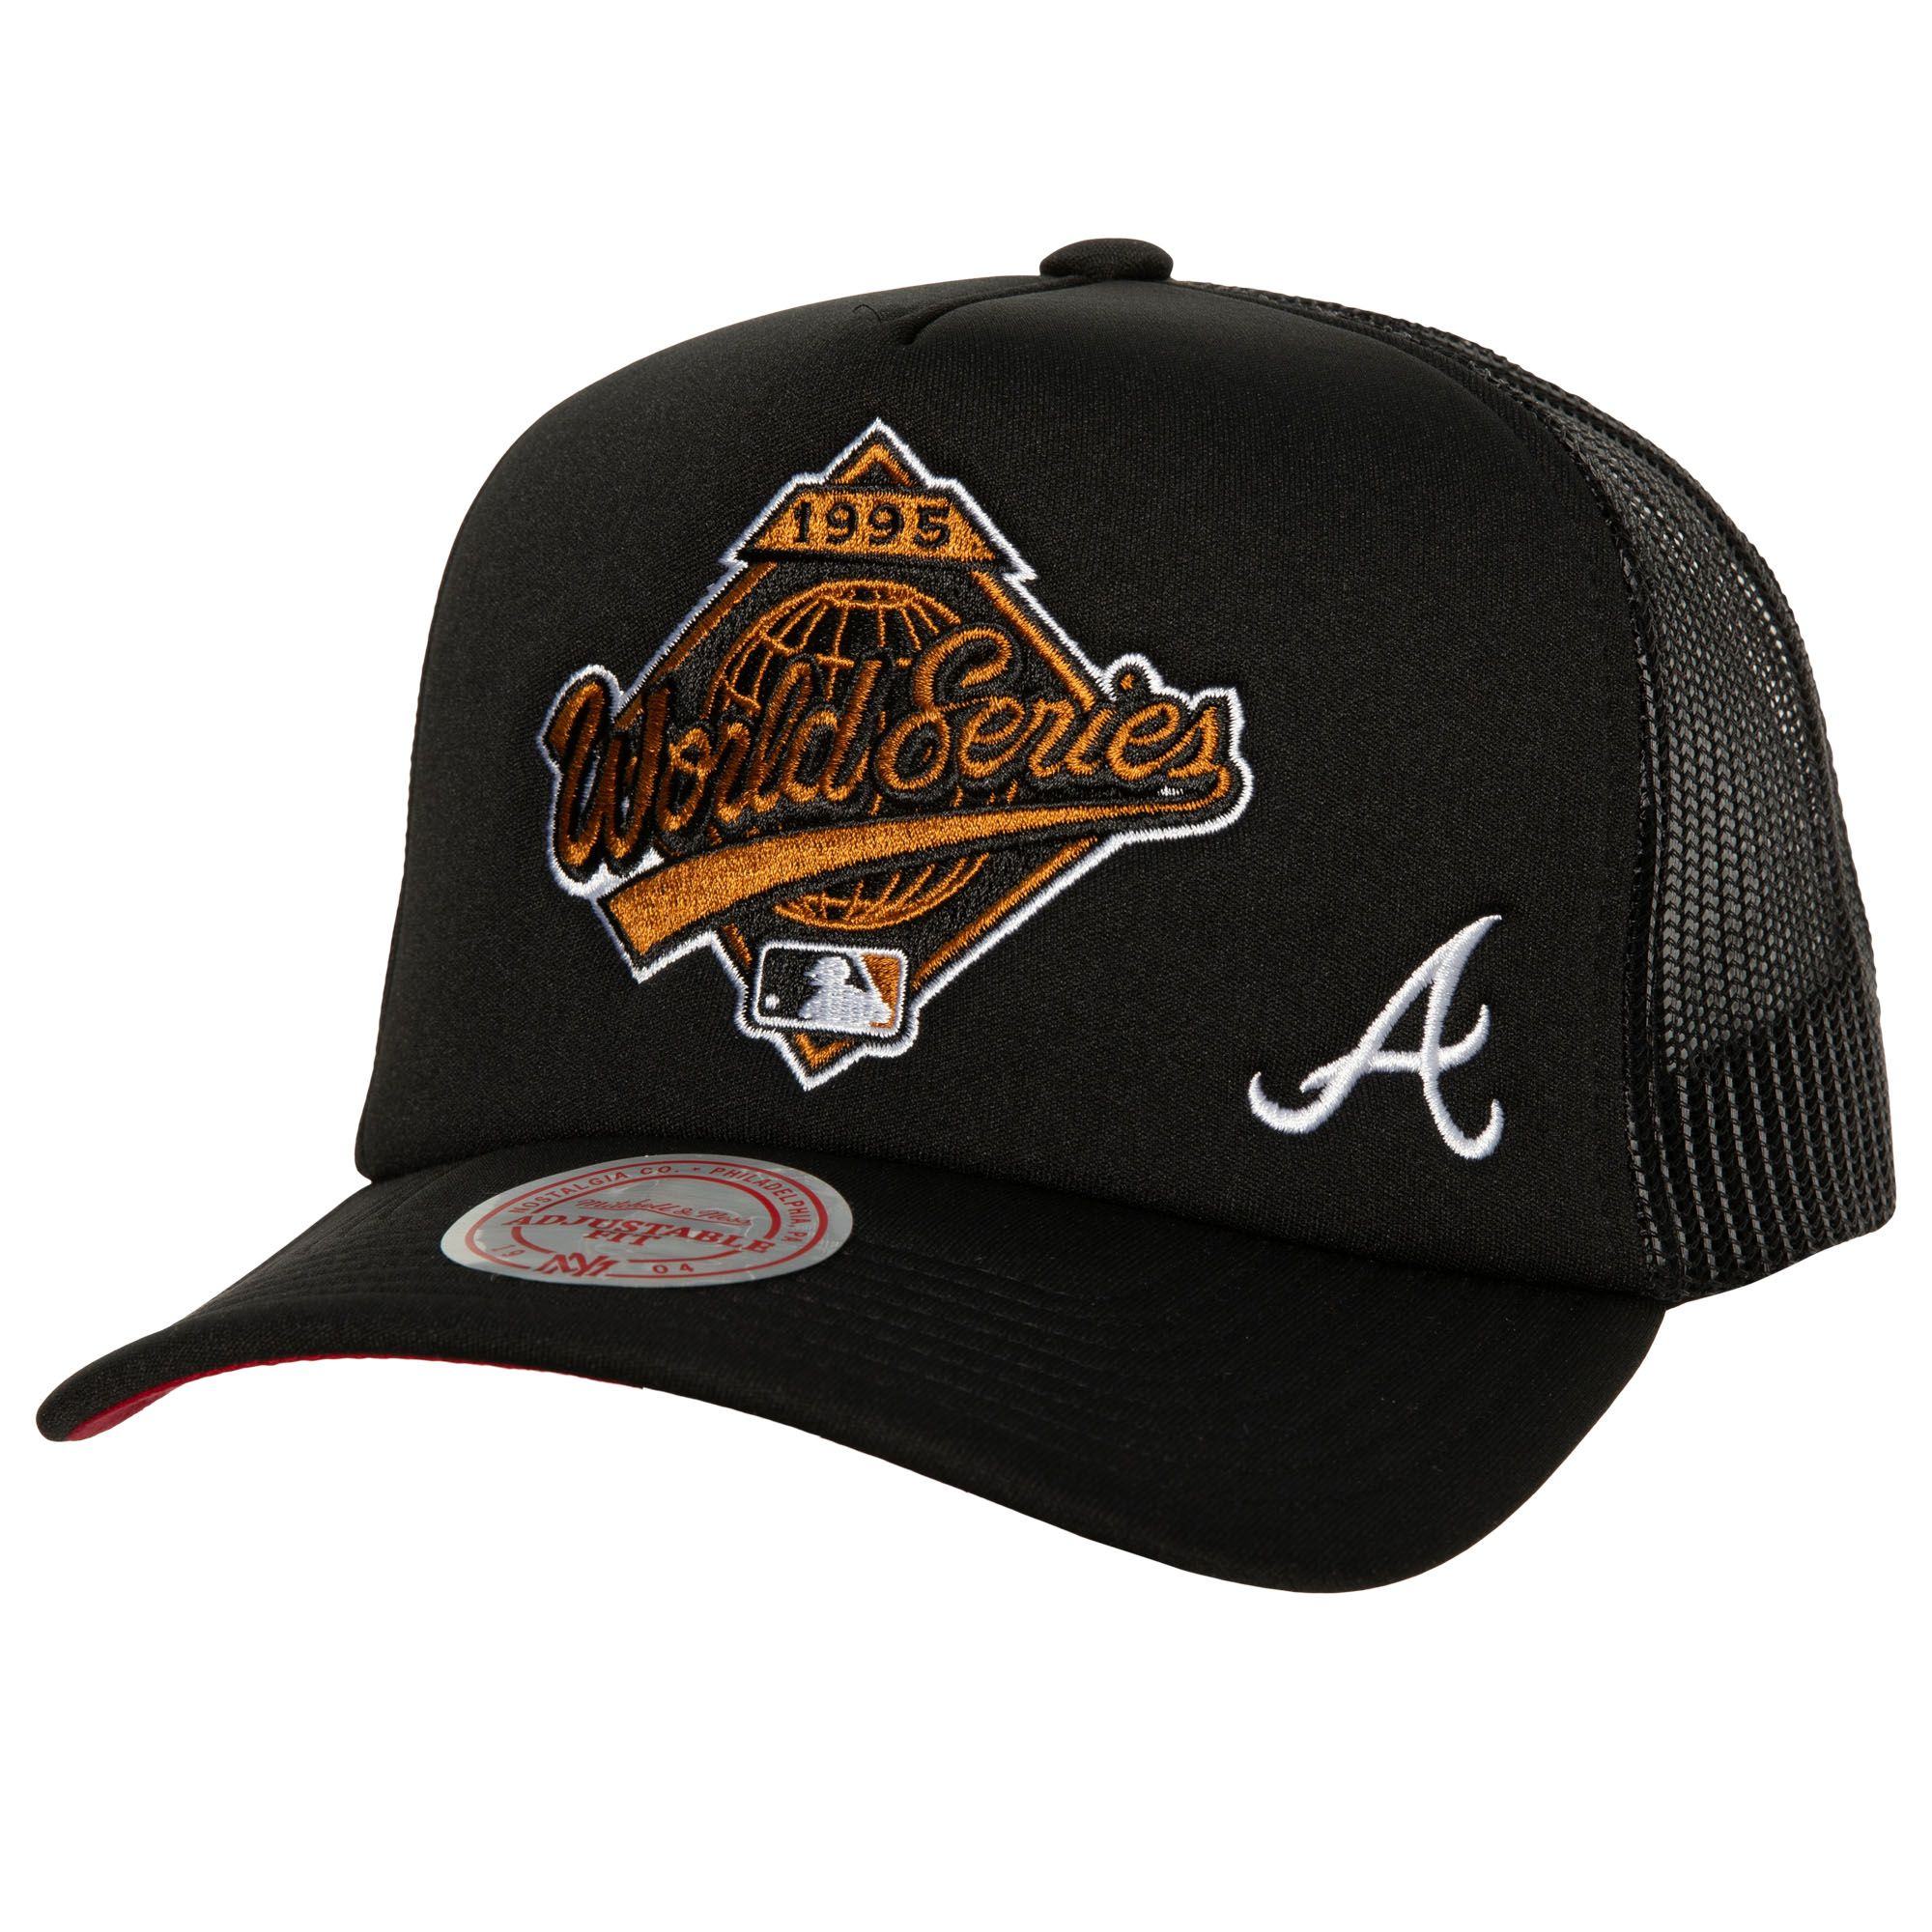 Mitchell & Ness Ws Trucker Coop Atlanta Braves Snapback Adjustable Hat